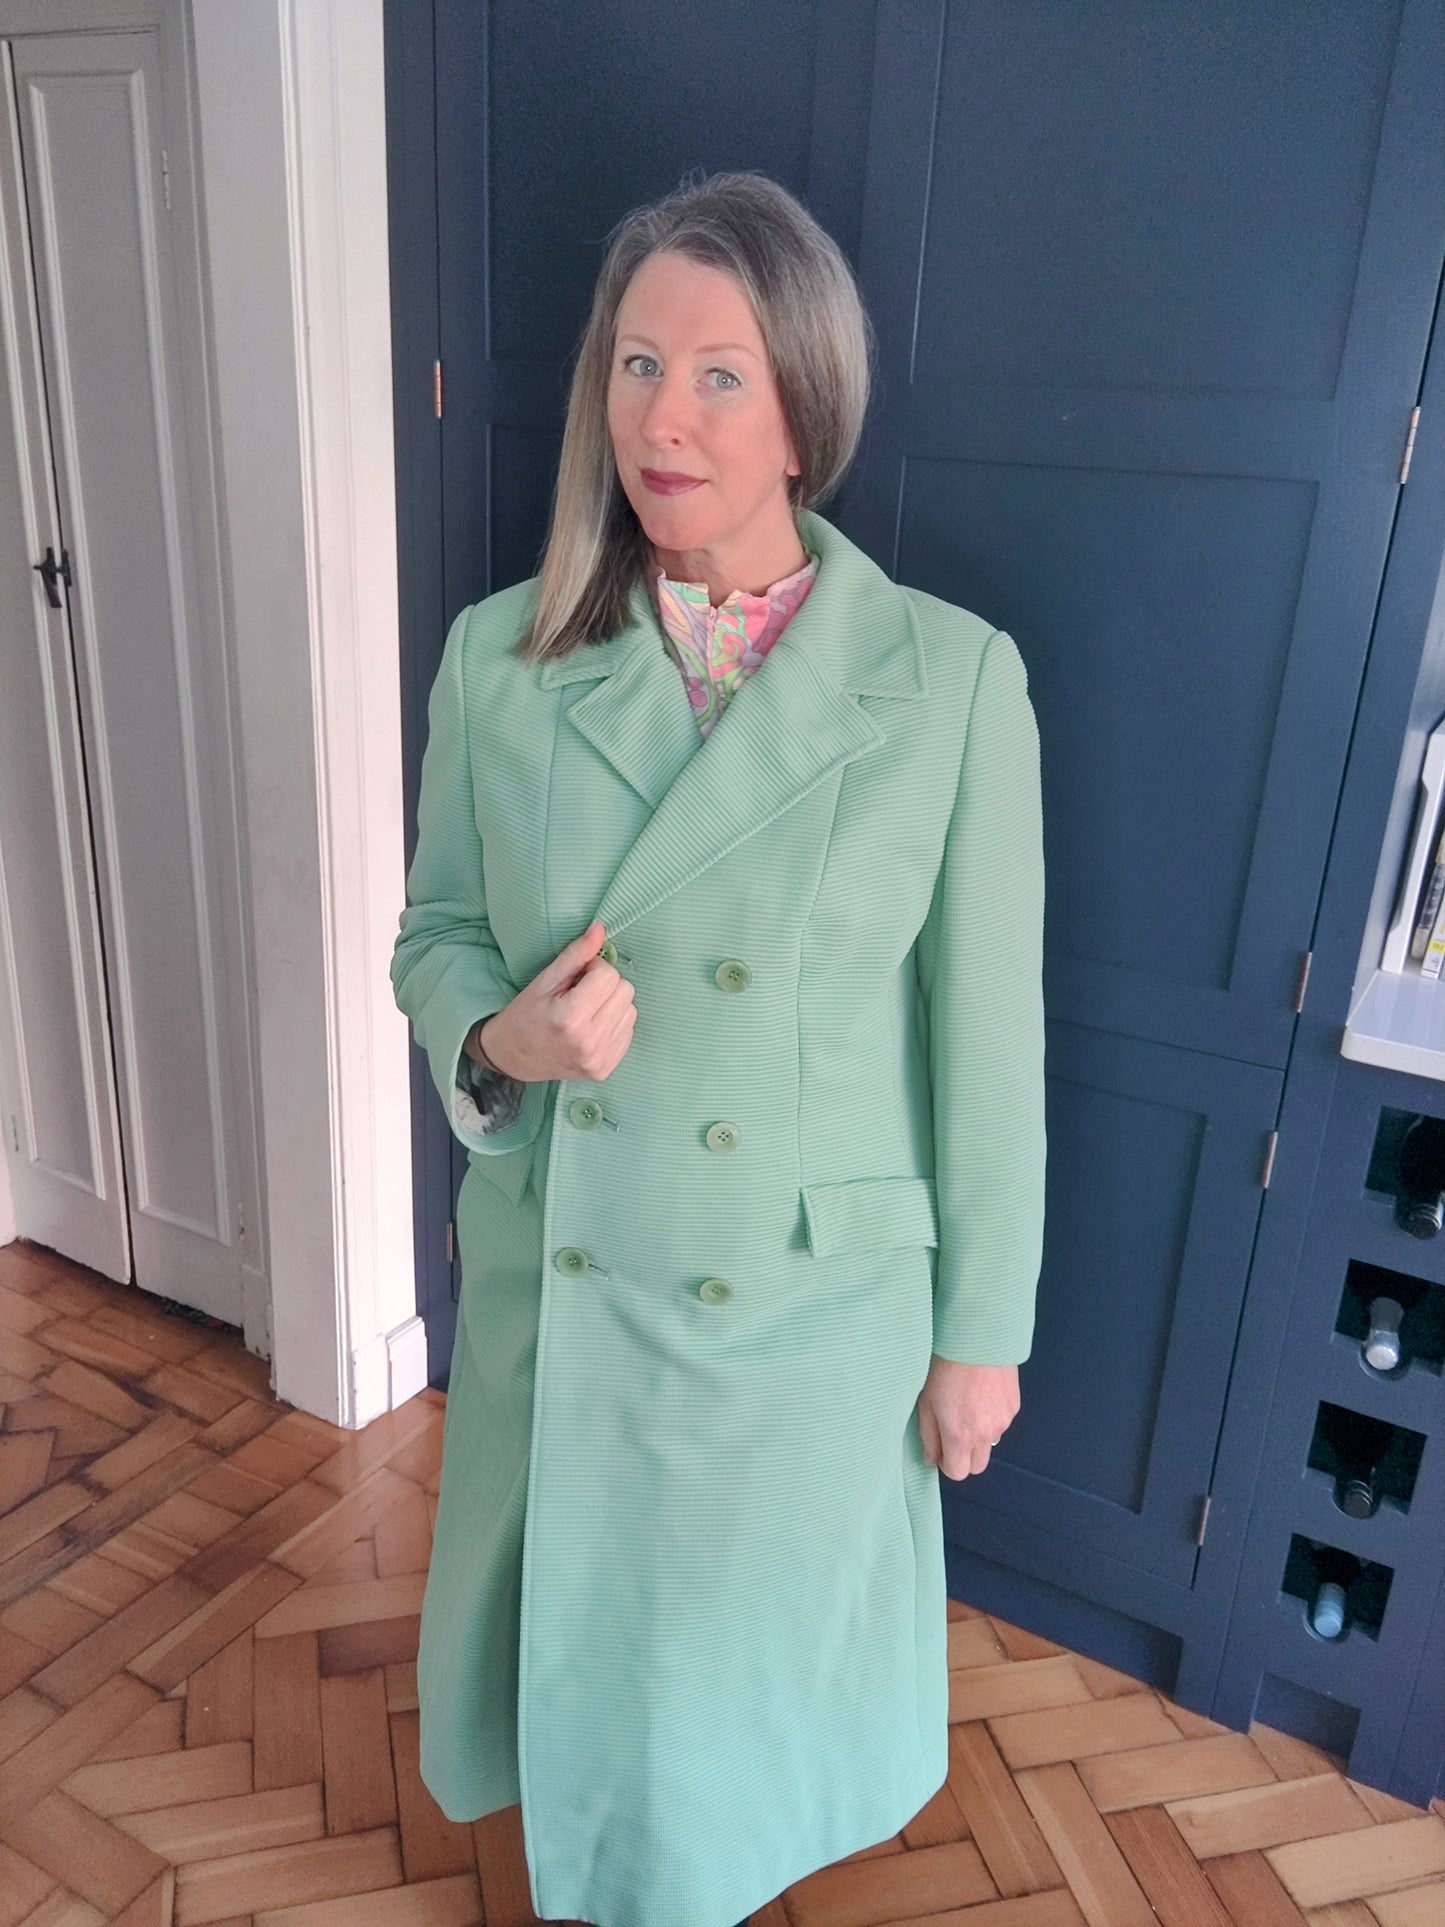 Mint green 60s Crimplene jacket. Size 14.